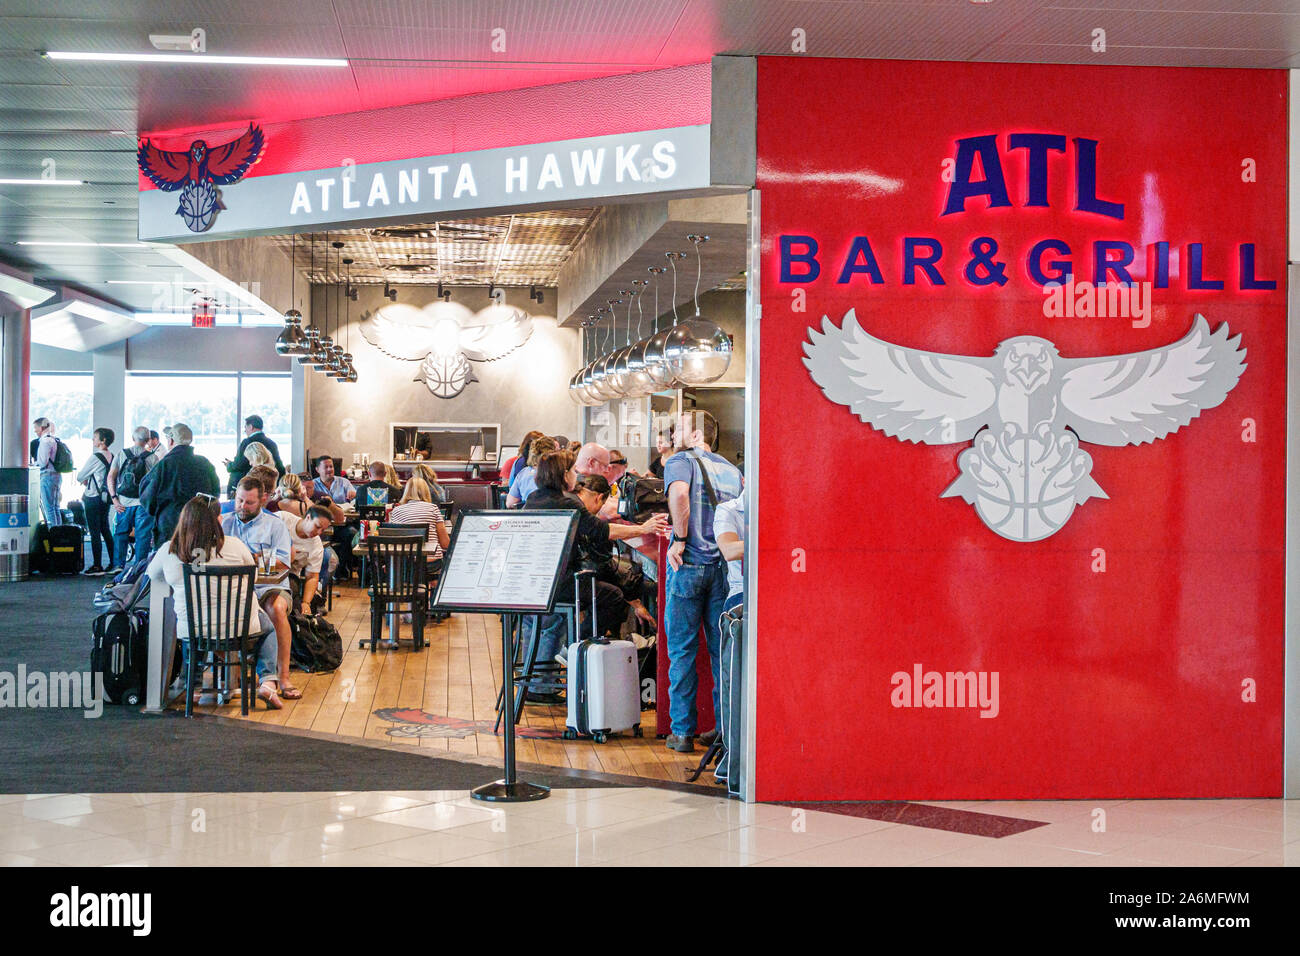 Georgia,Atlanta,Hartsfield-Jackson Atlanta International Airport,terminal,à l'intérieur,ATL Bar & Grill, restaurant,thème équipe sportive,dîner,tables,homme,femme Banque D'Images